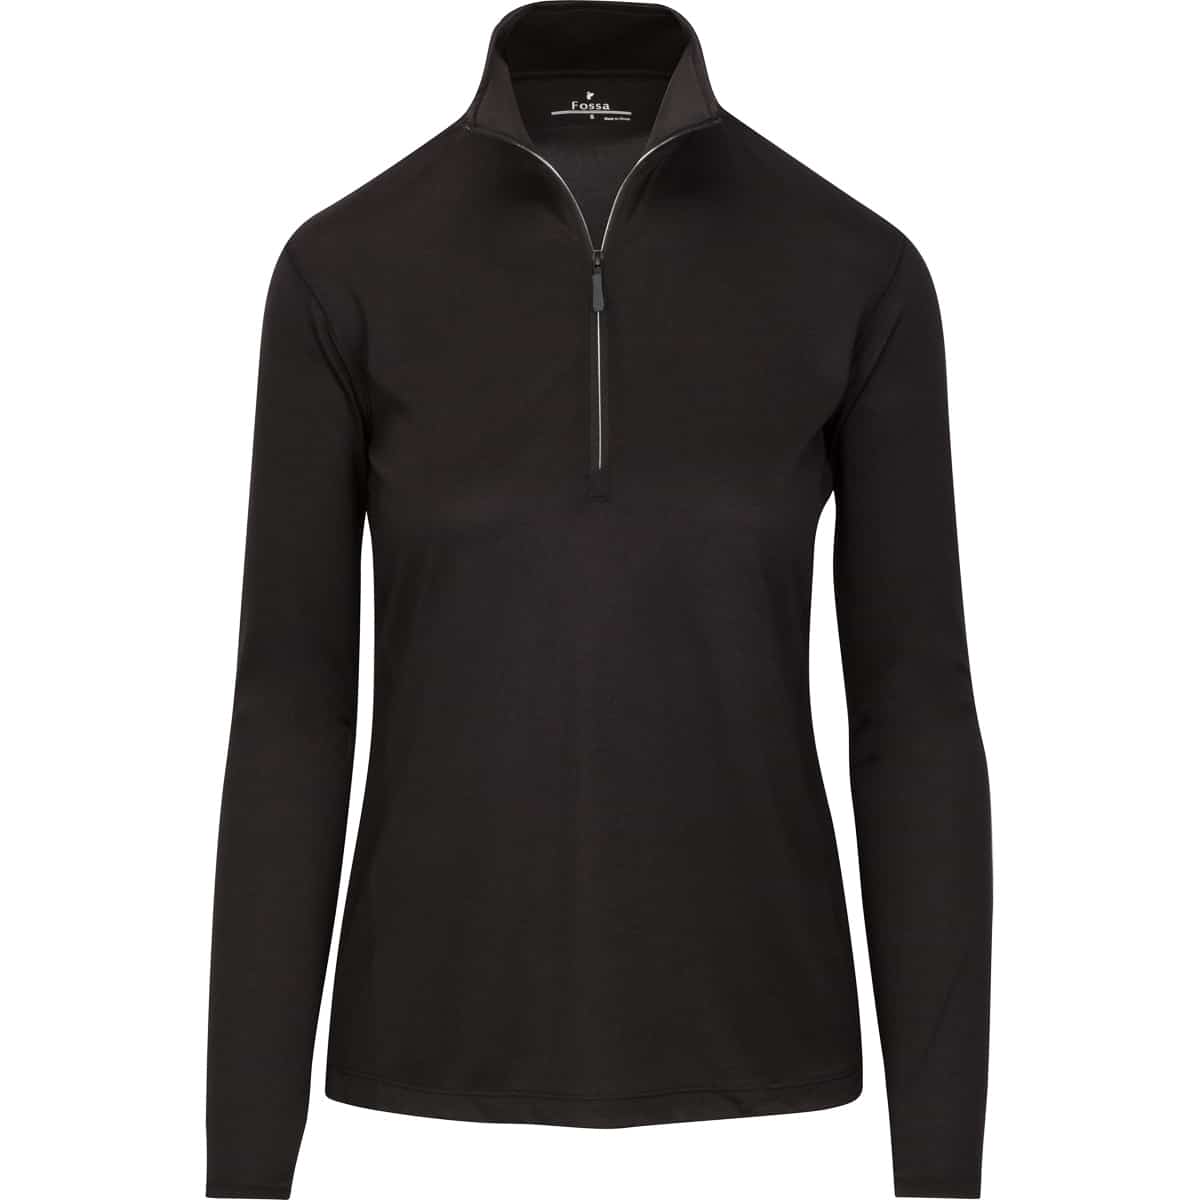 Fossa Apparel 4502 - Ladies Mirage Long Sleeve Shirt $35.98 - Sweatshirts